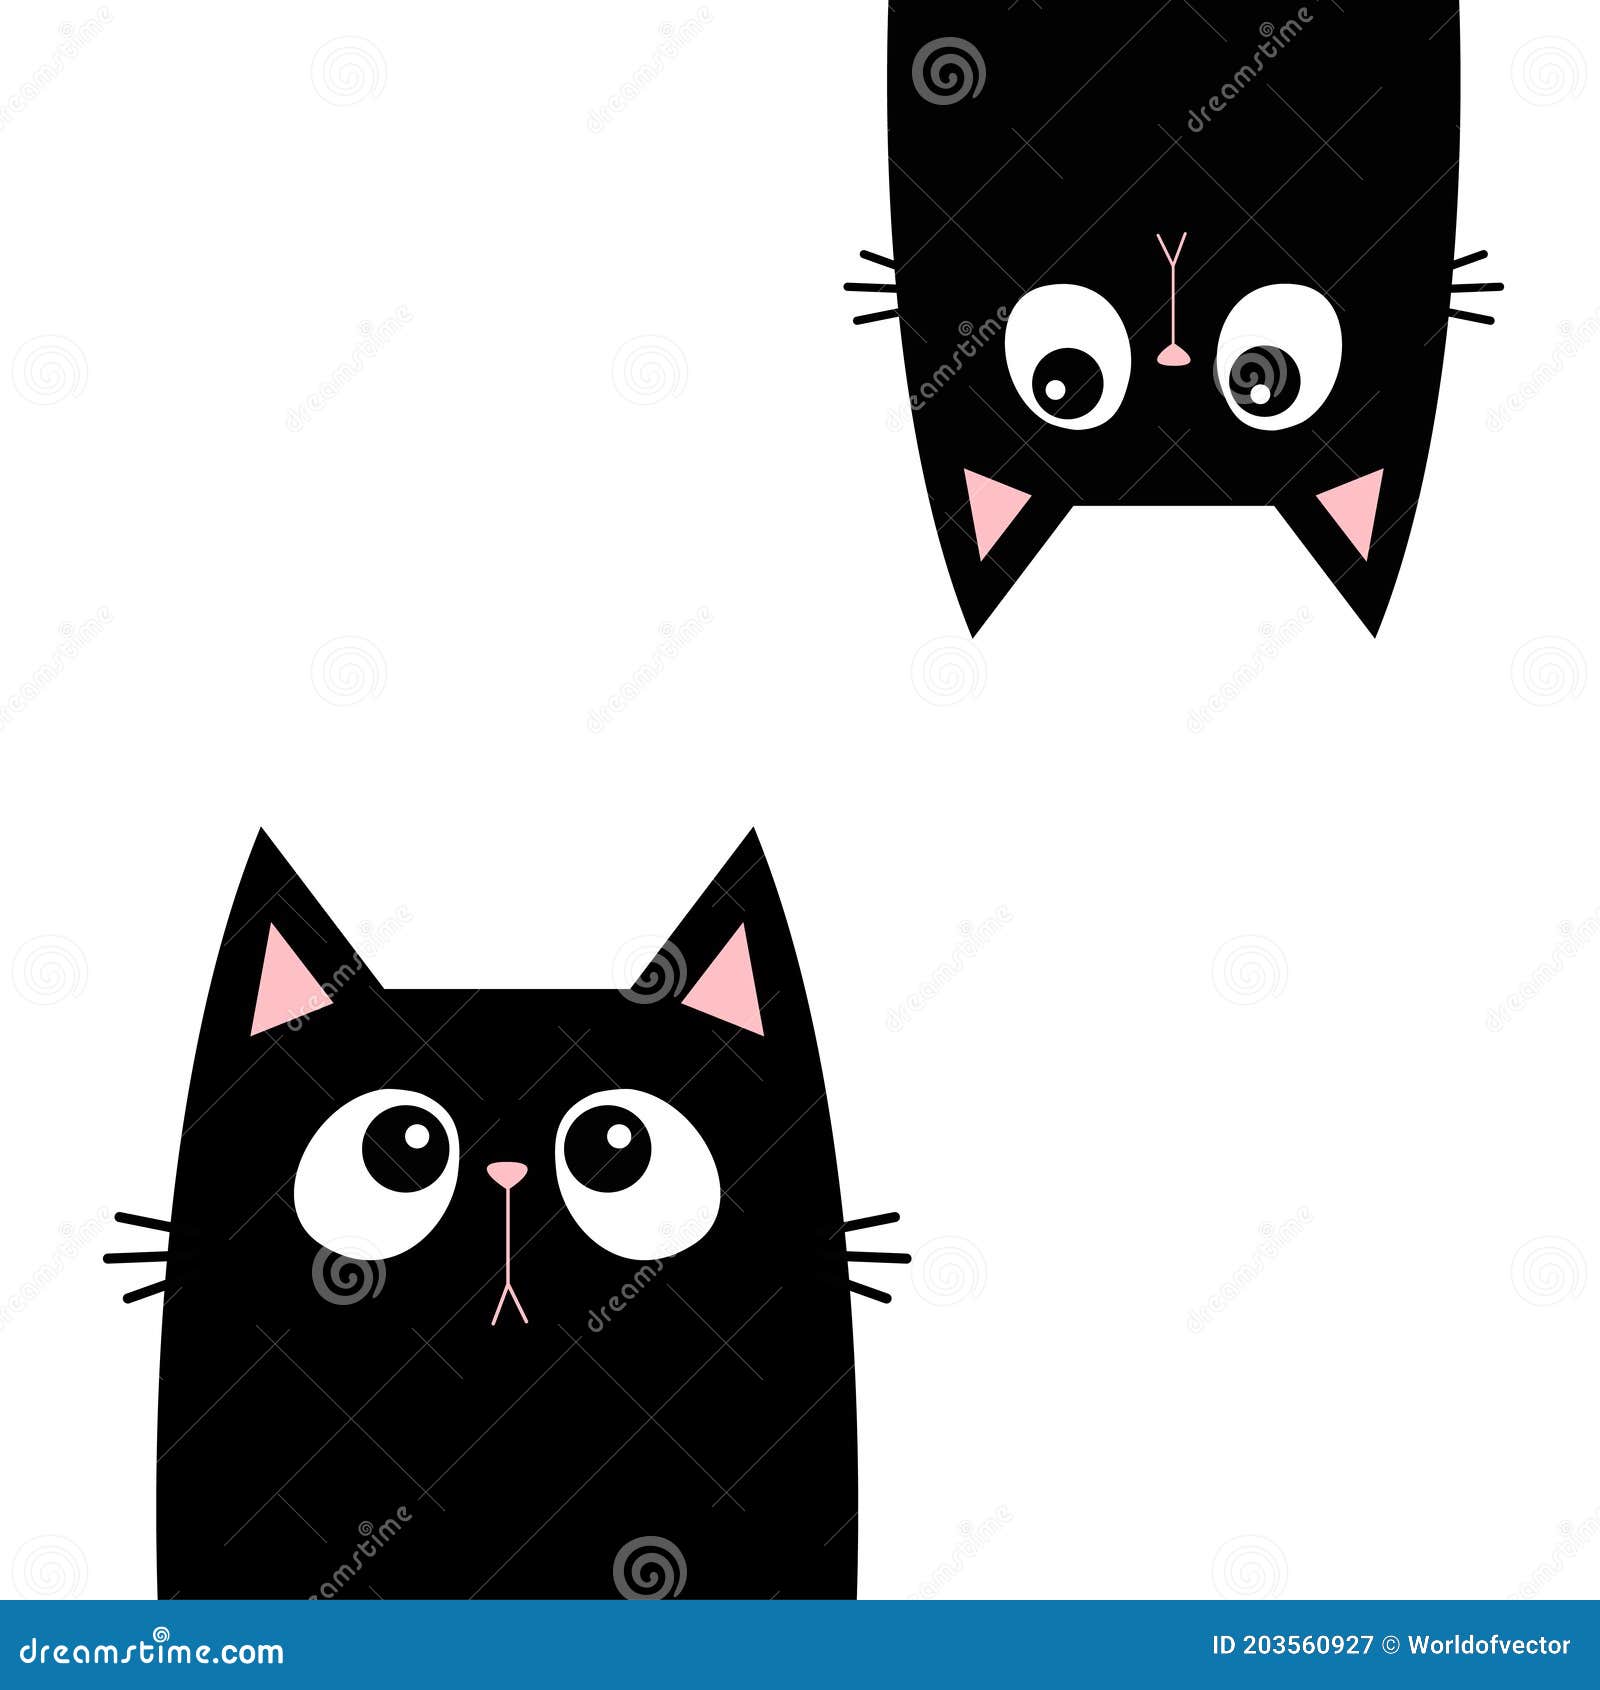 Dois Gatos desenhados num estilo Kawaii simples - Gatos - Just